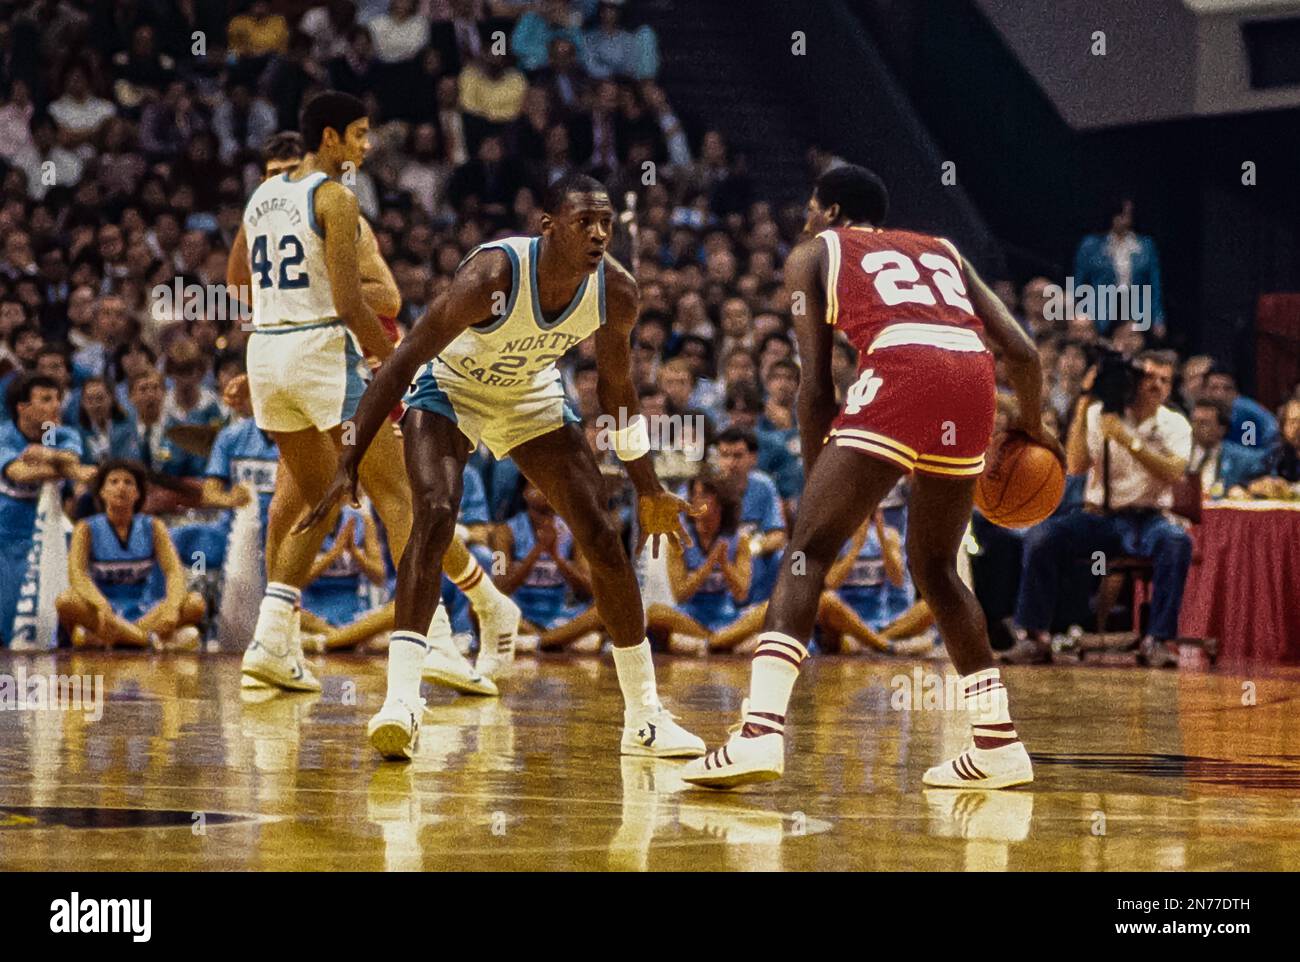 83 Michael Jordan Olympic 1984 Stock Photos, High-Res Pictures